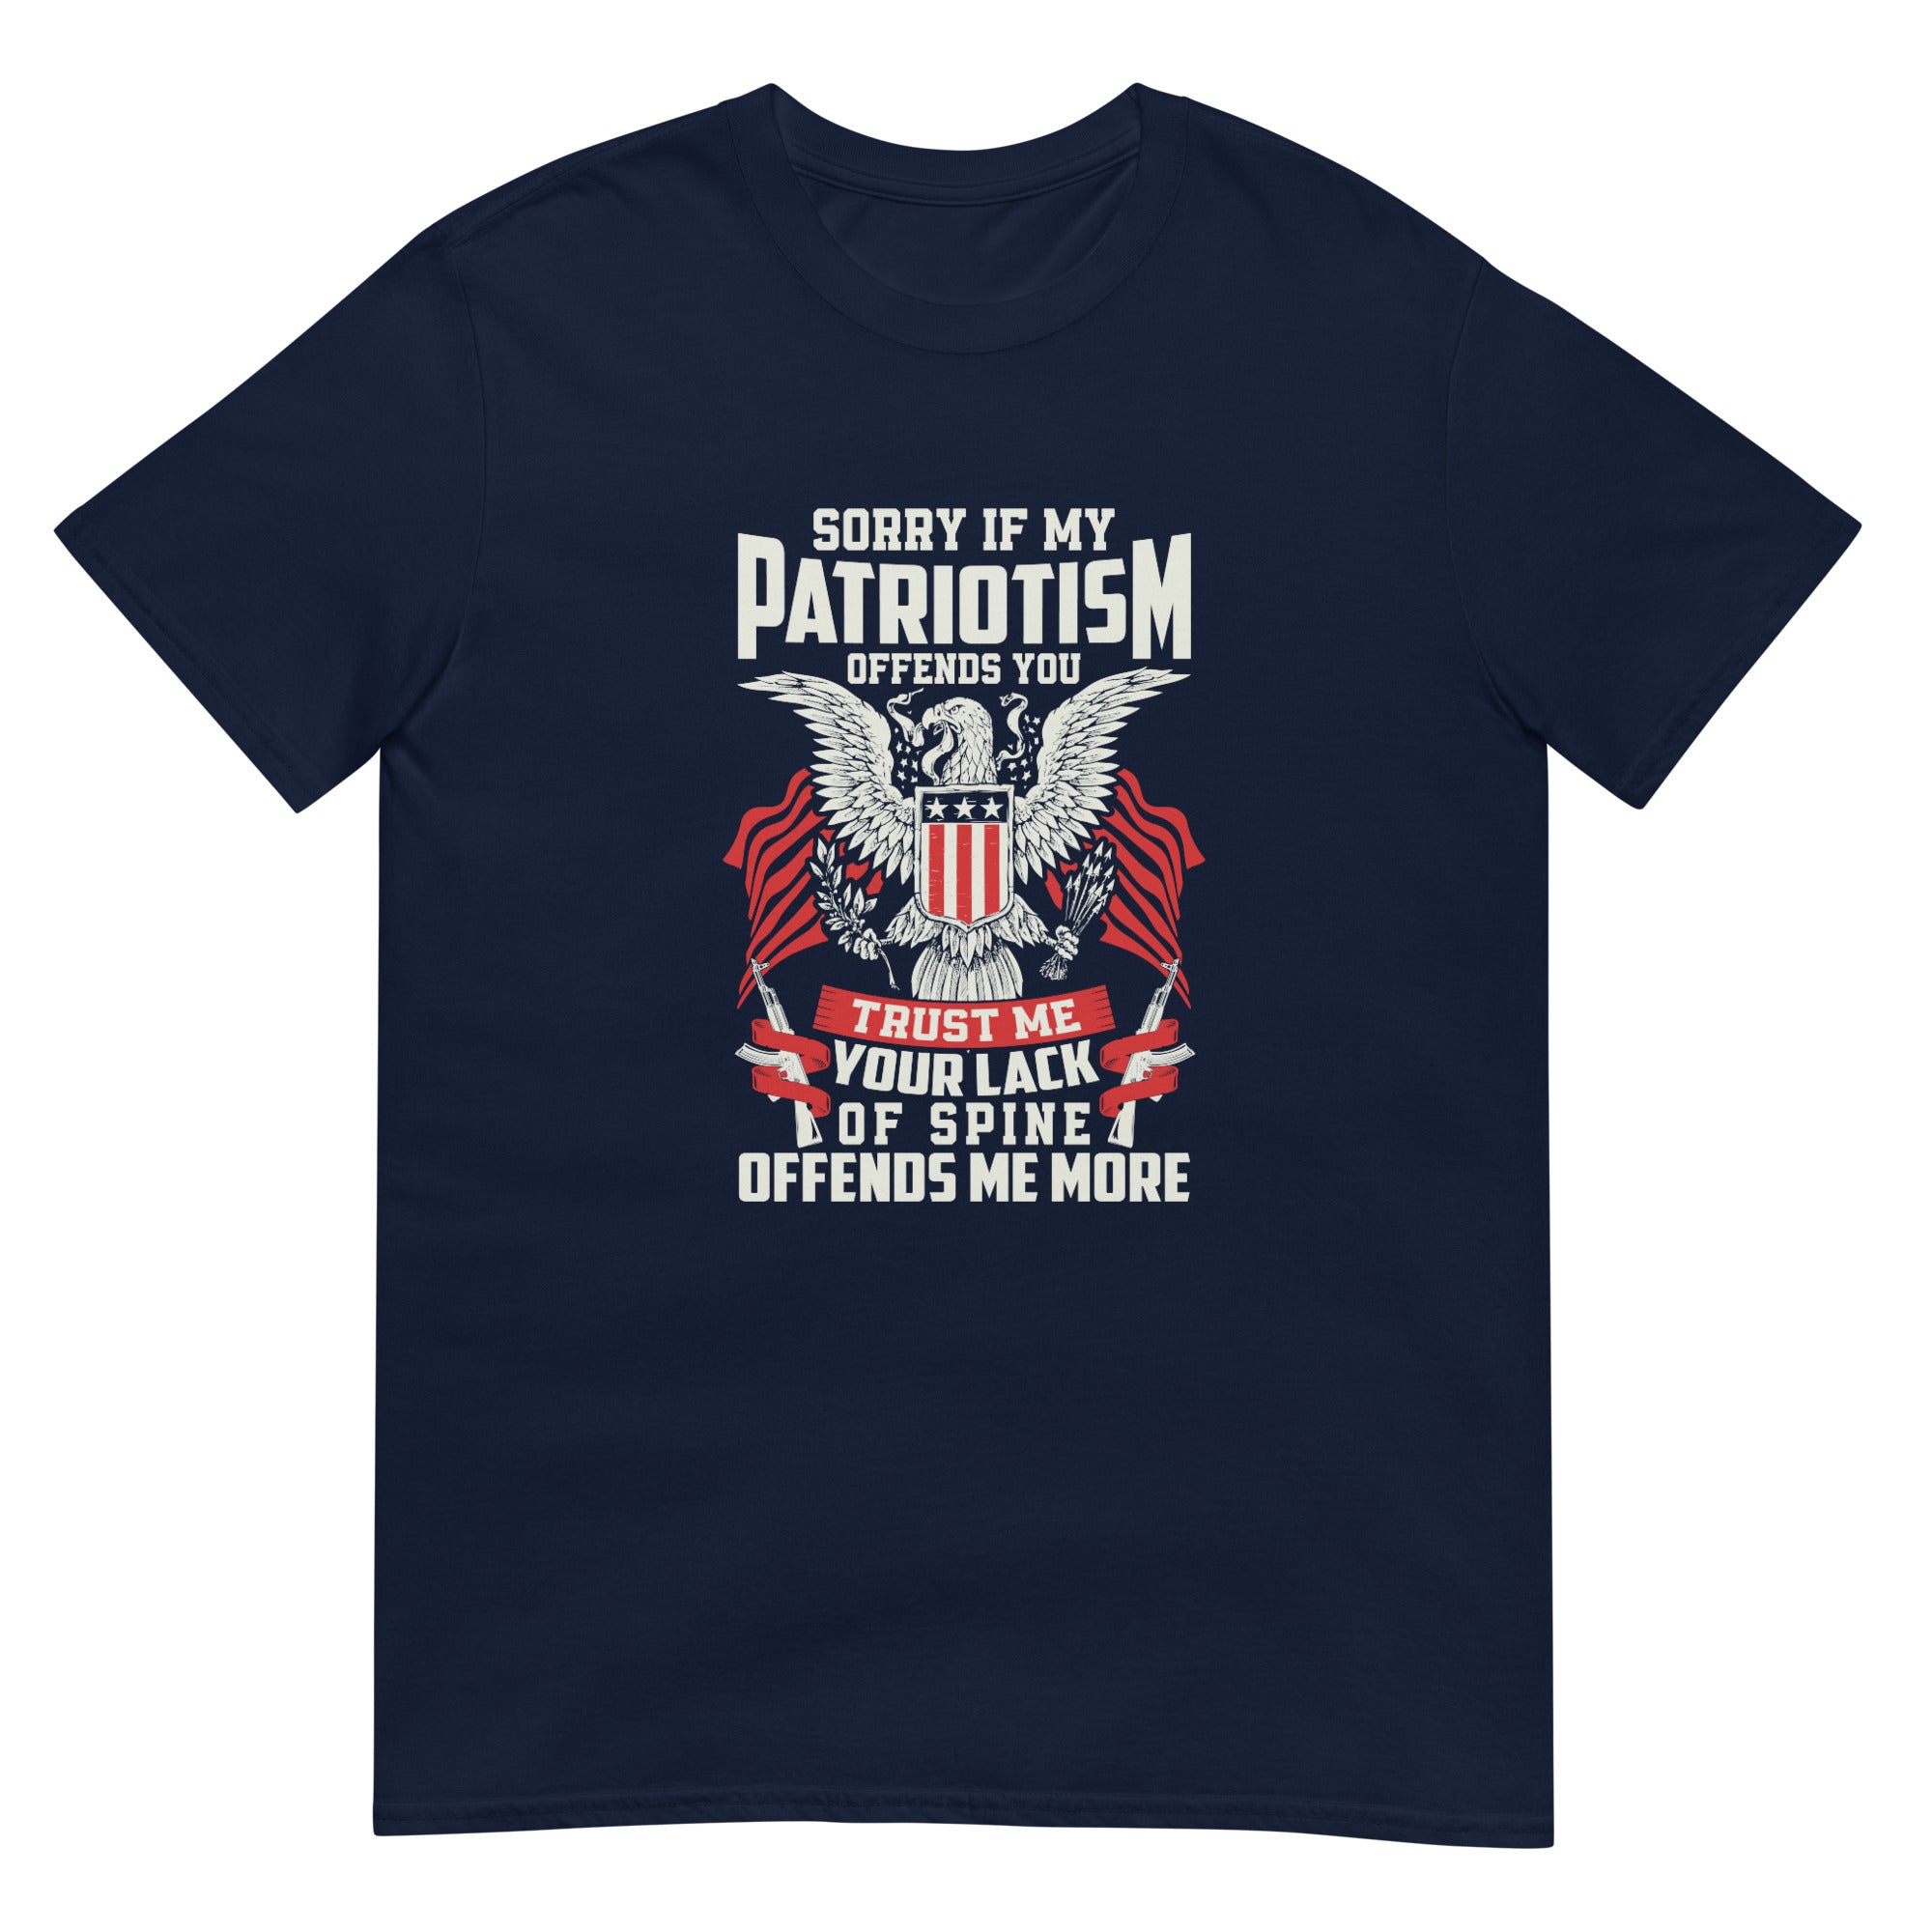 My Patriotism Offends You Short-Sleeve Unisex T-Shirt